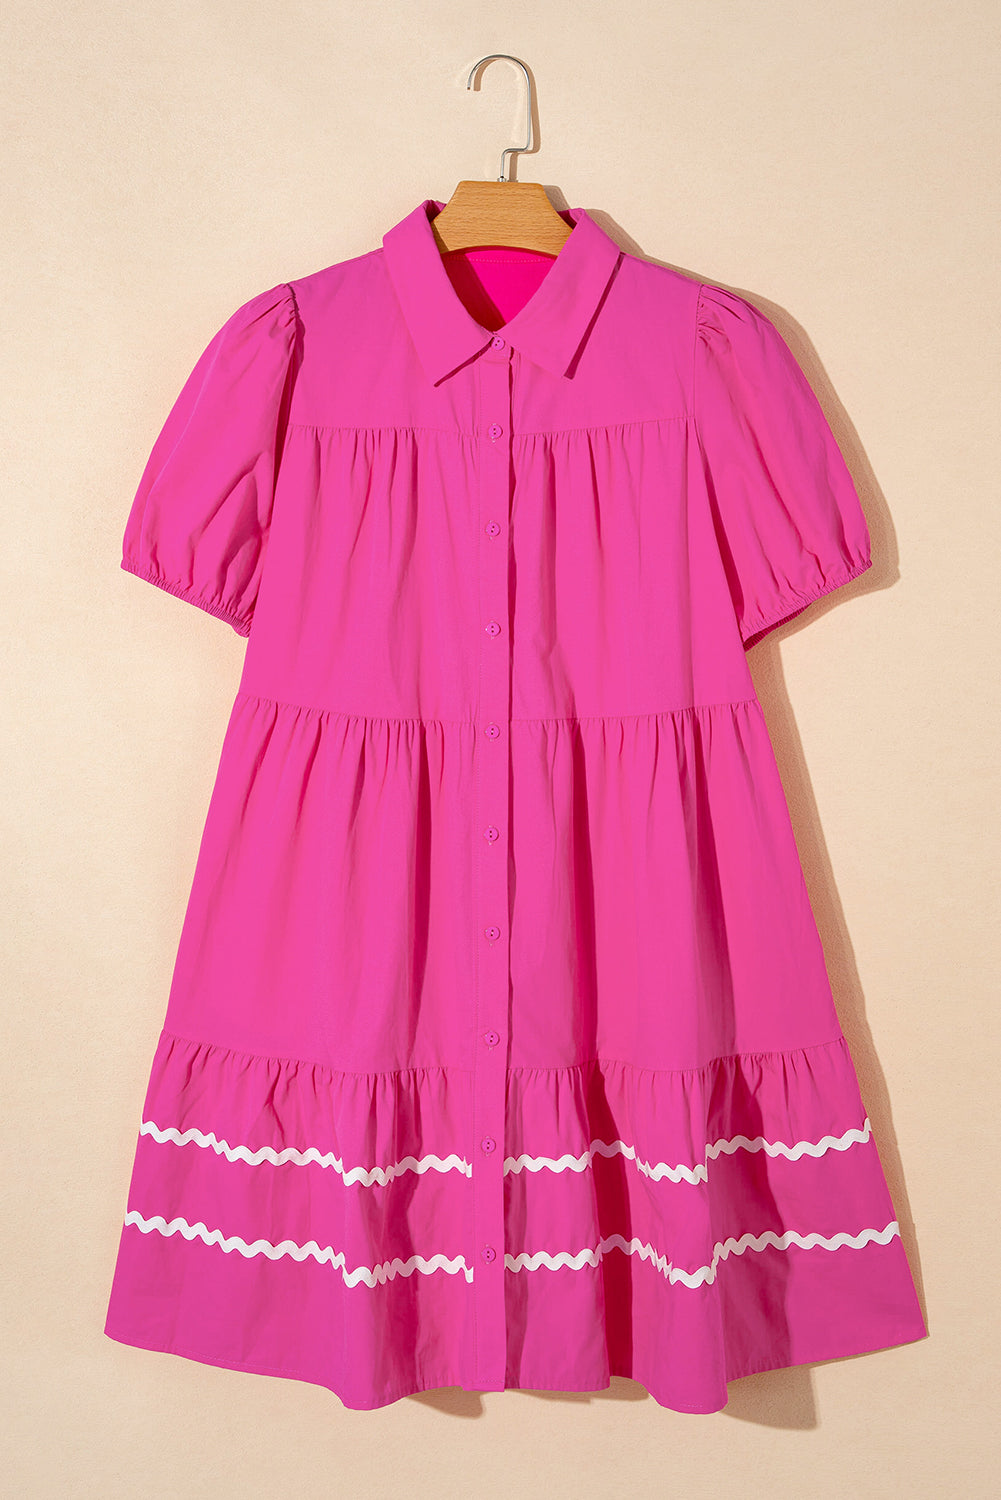 Vintage Charm: Ric-Rac Detailing Rose Red Puff Sleeve Shirt Dress